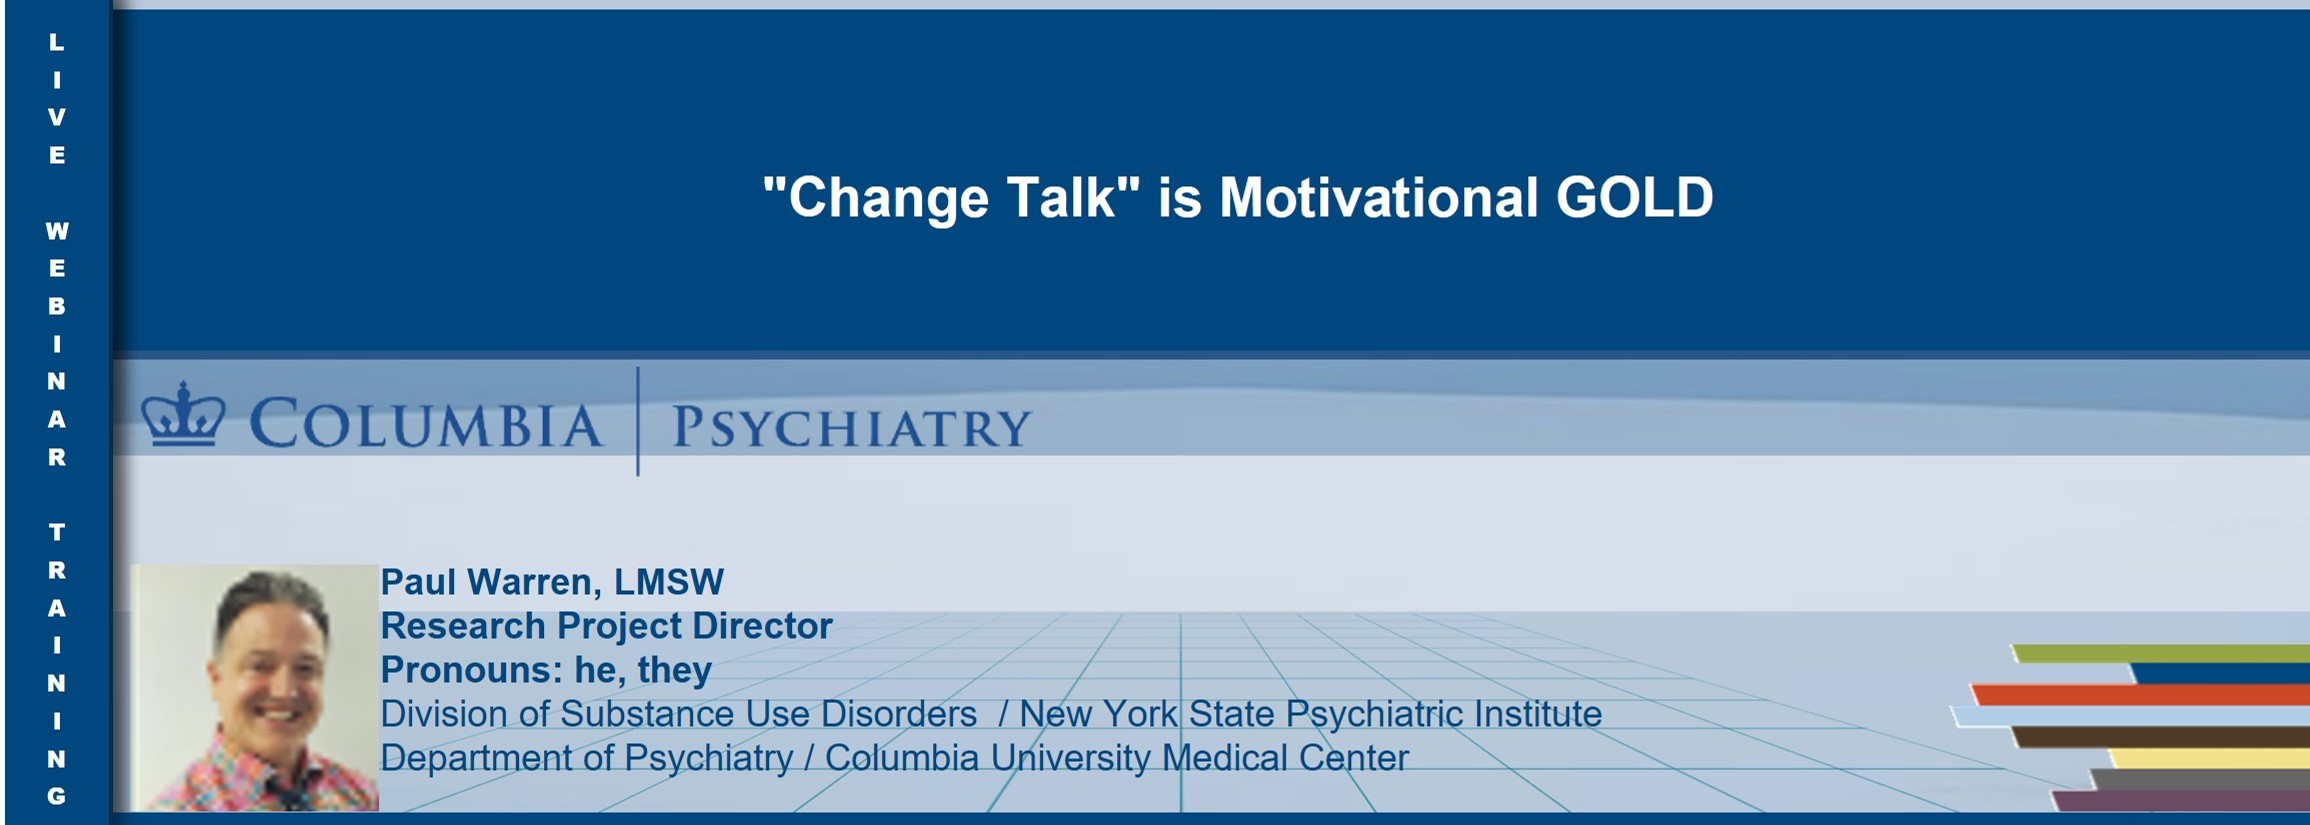 "Change Talk" is Motivational GOLD